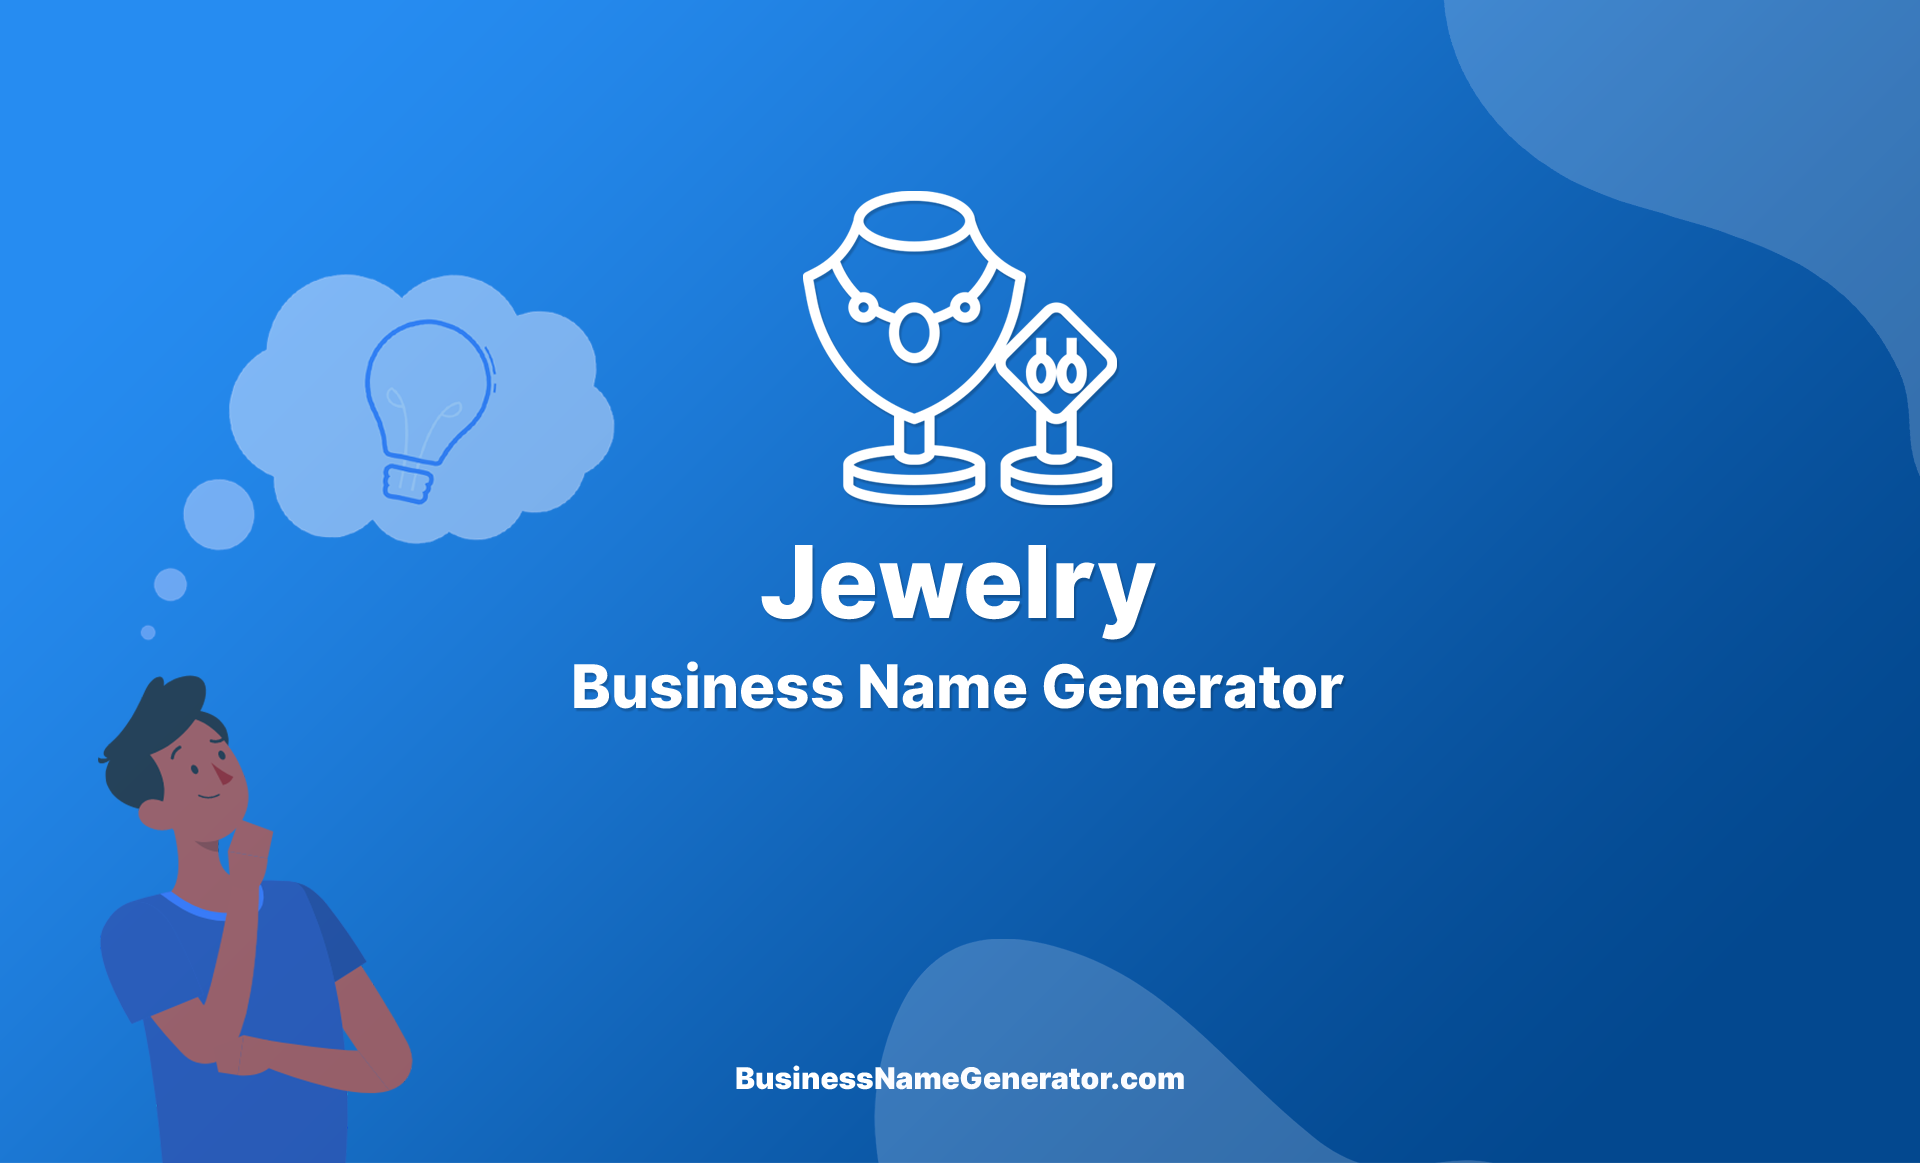 Jewelry Business Name Generator